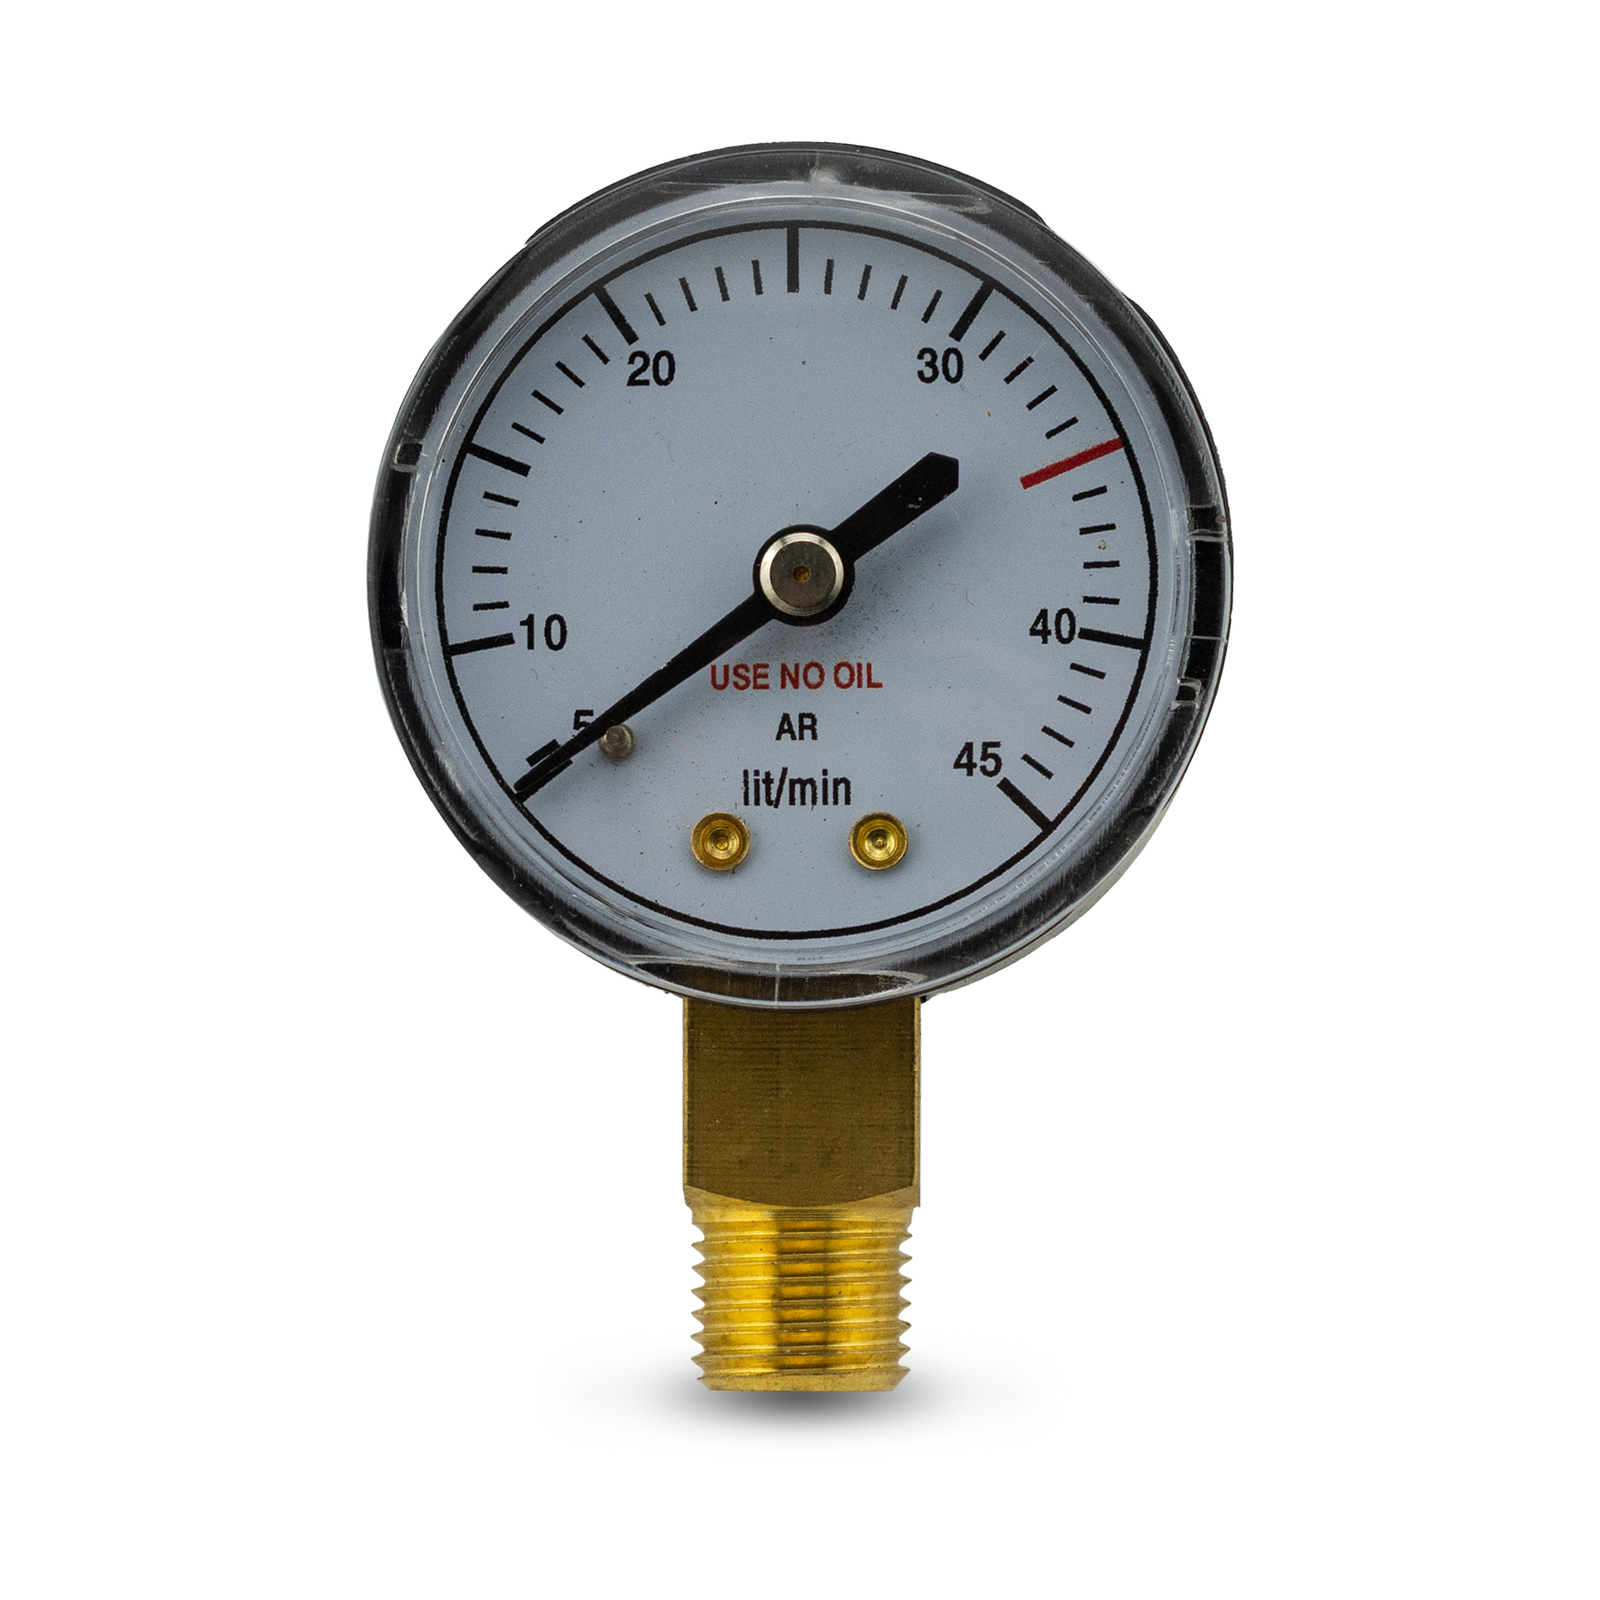 Low Pressure Gauge 0-45LPM for Argon Reg